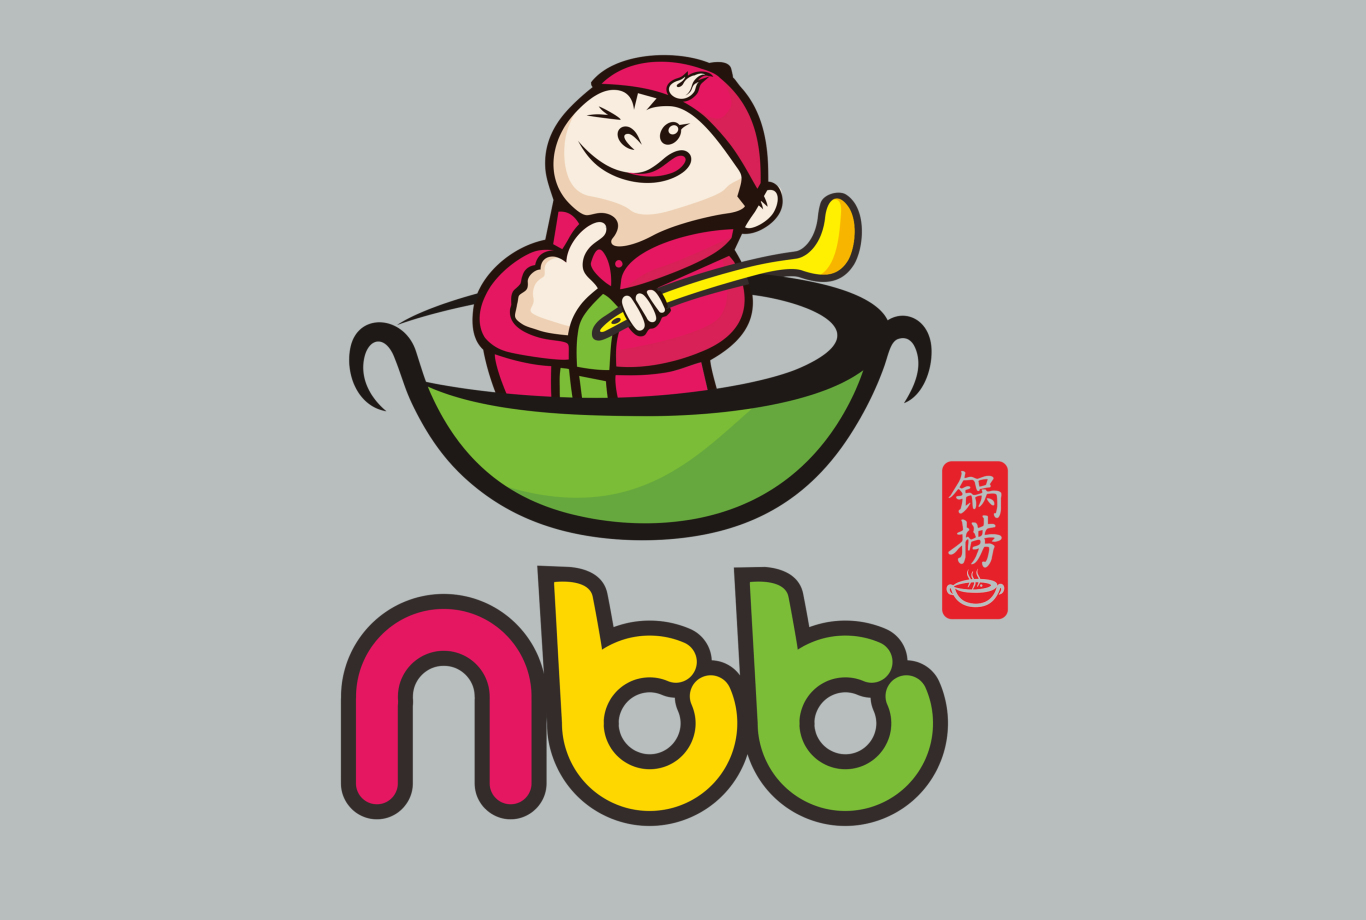 nbb火锅logo设计图2